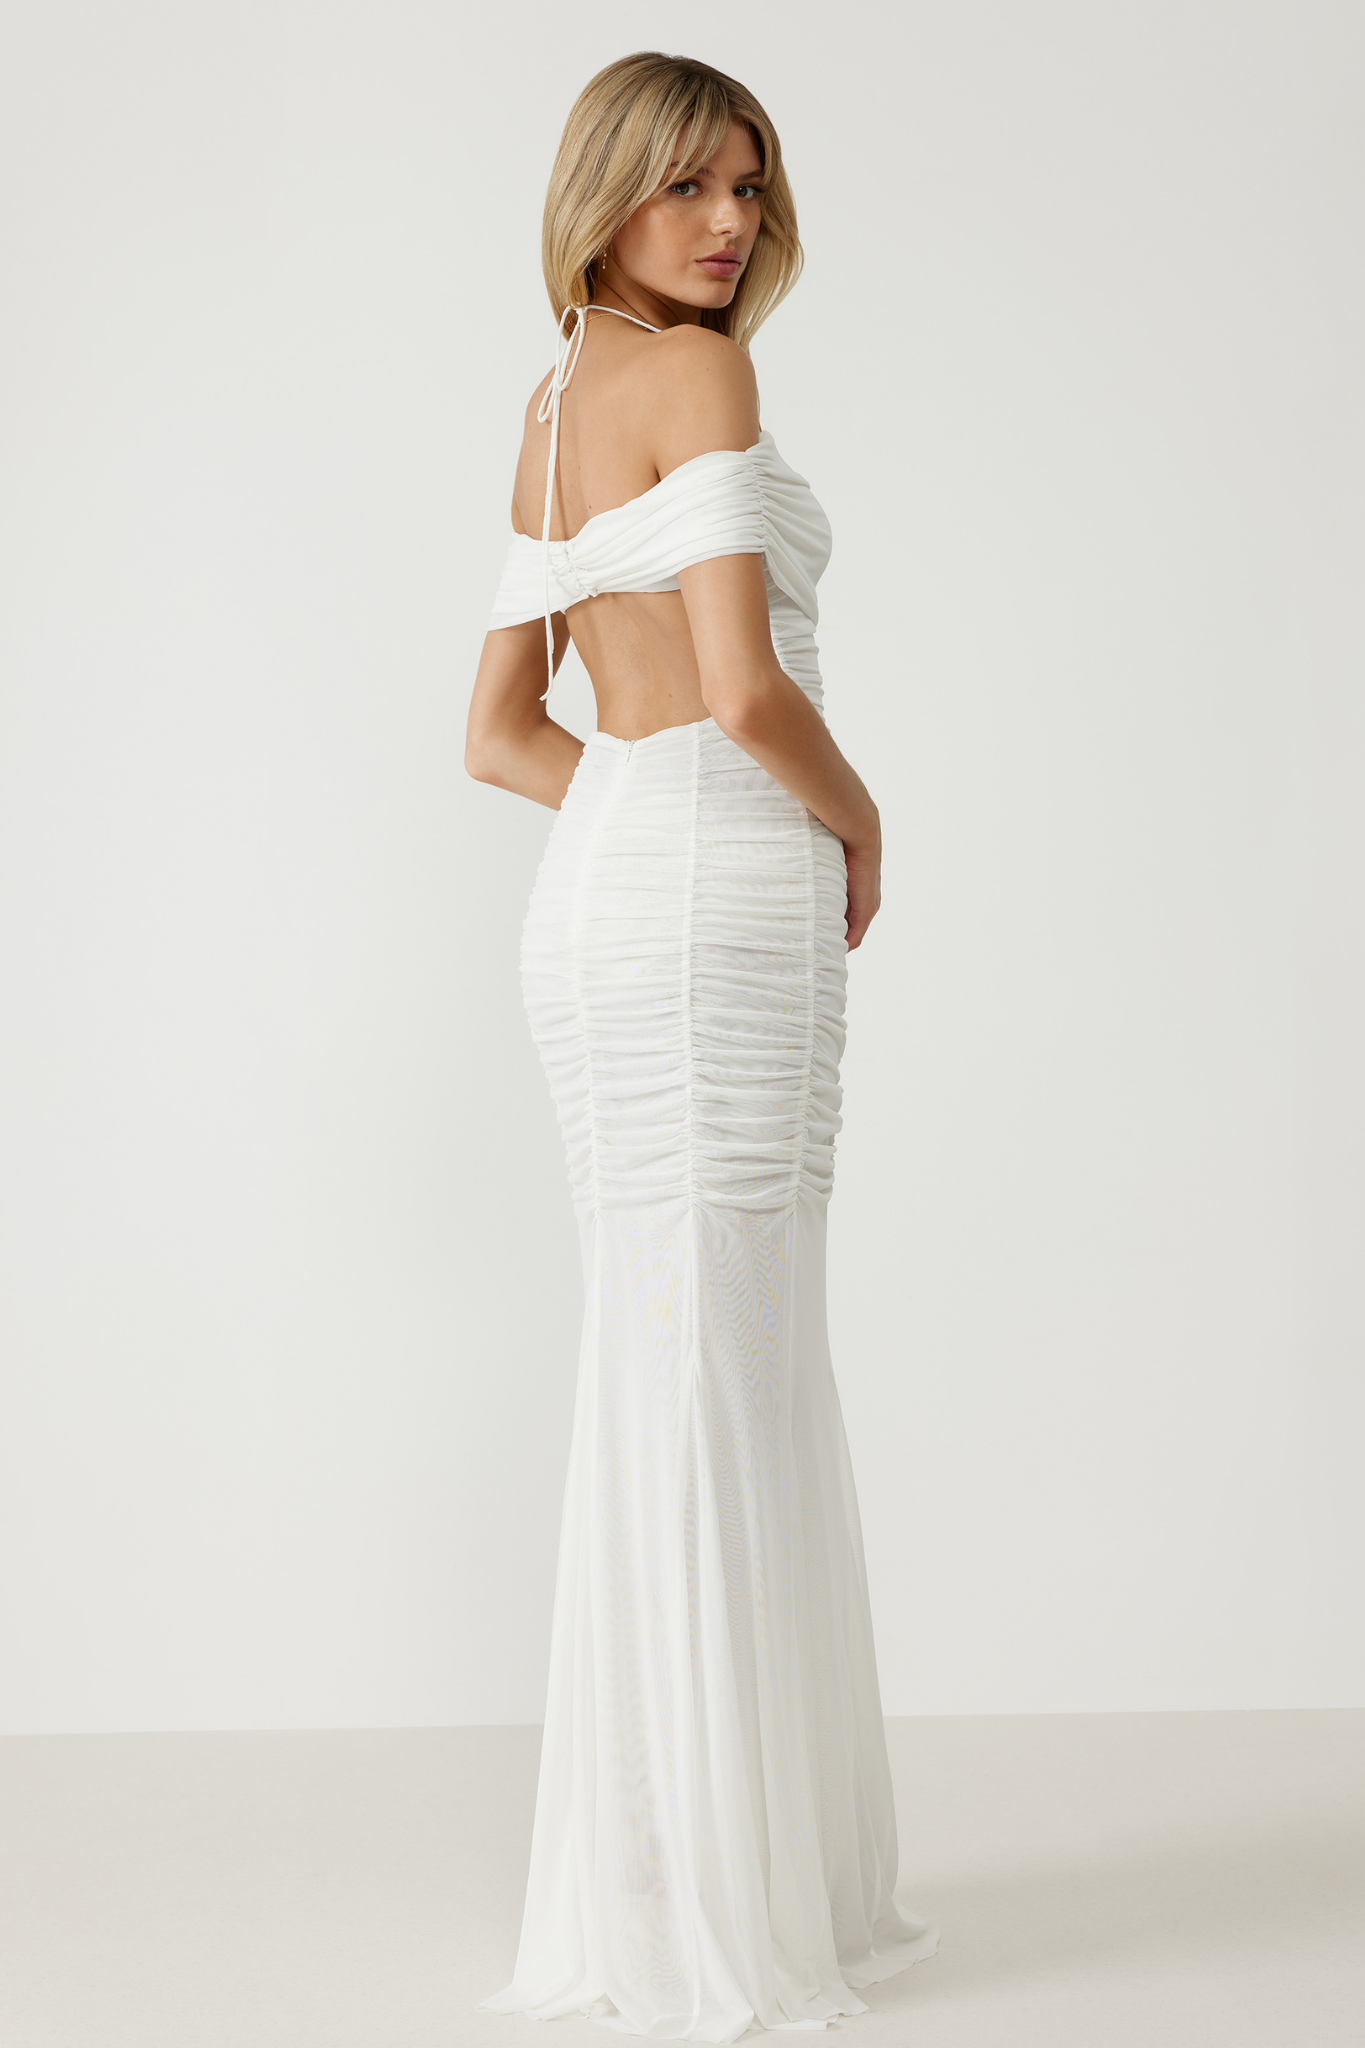 Xena Dress in White by Lexi - RENTAL